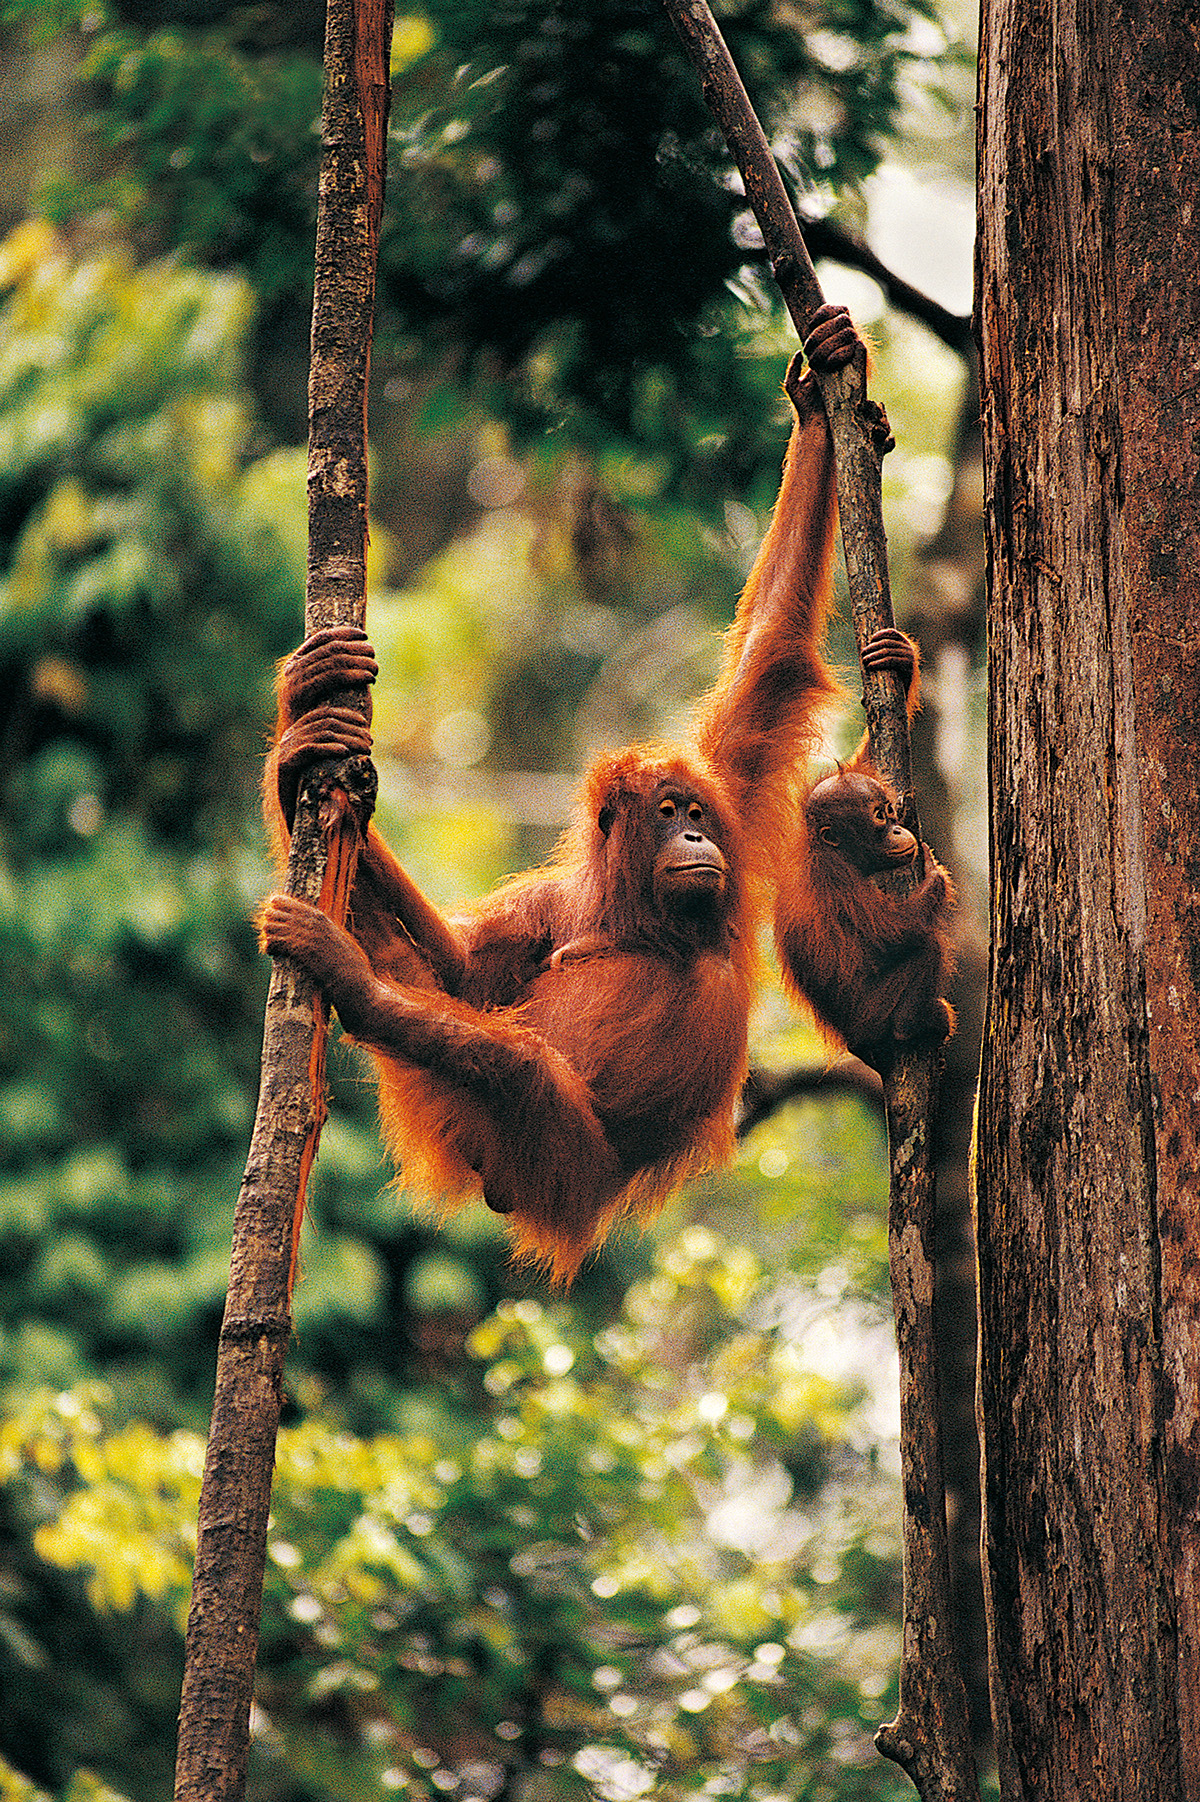 Woods, Climbing Trees, Orangutans - Orangutan - HD Wallpaper 